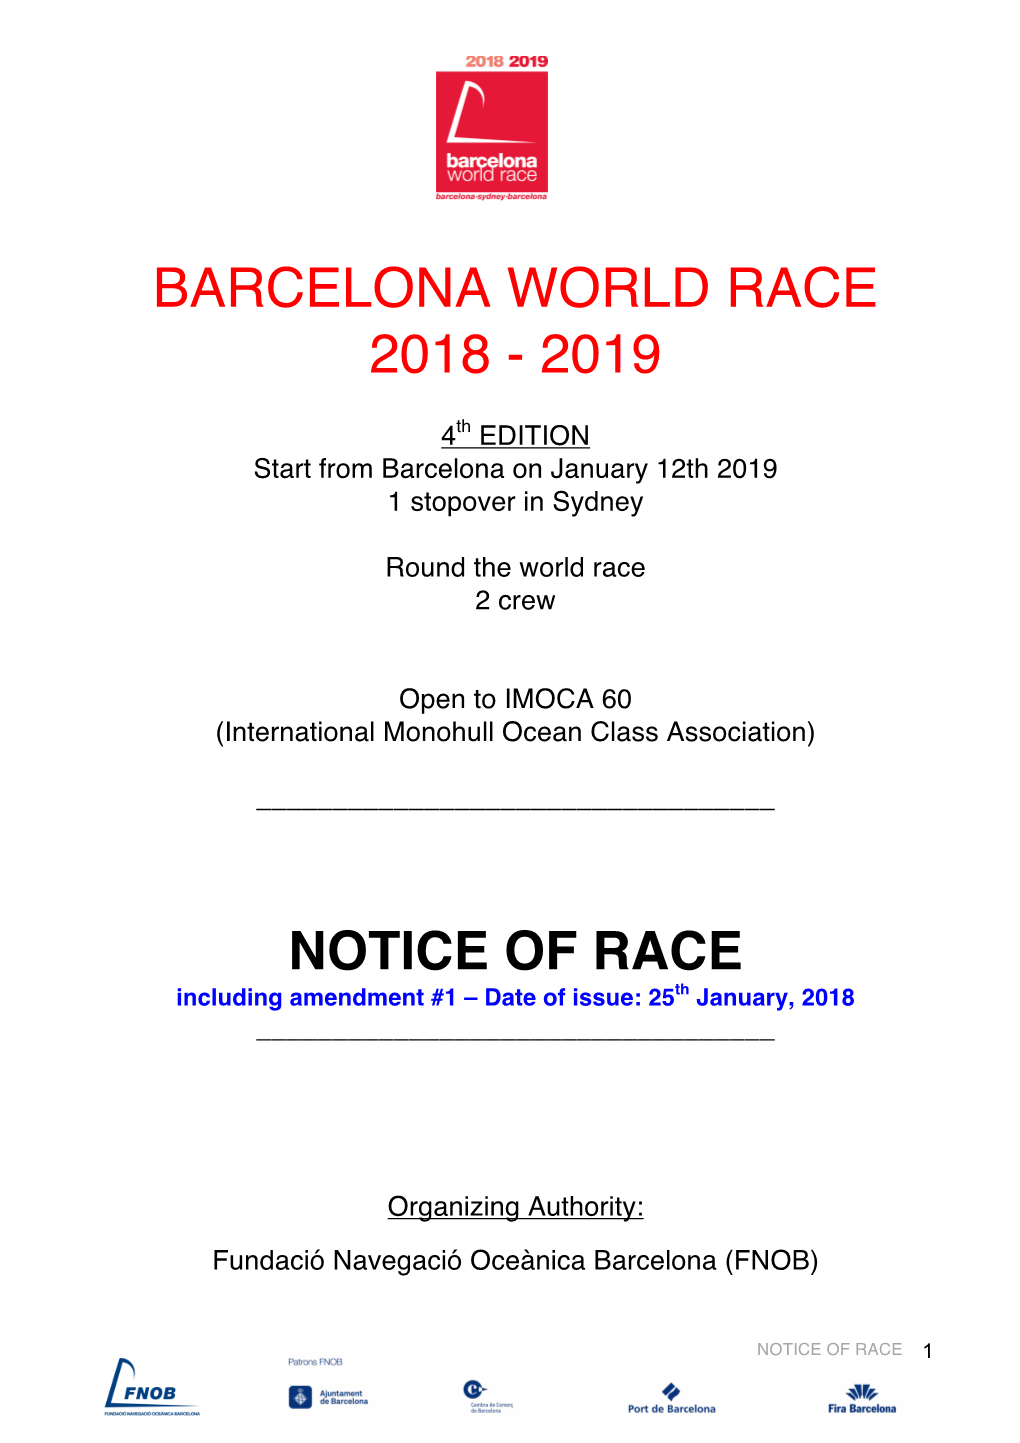 Notice of Race Barcelona World Race 2018-2019